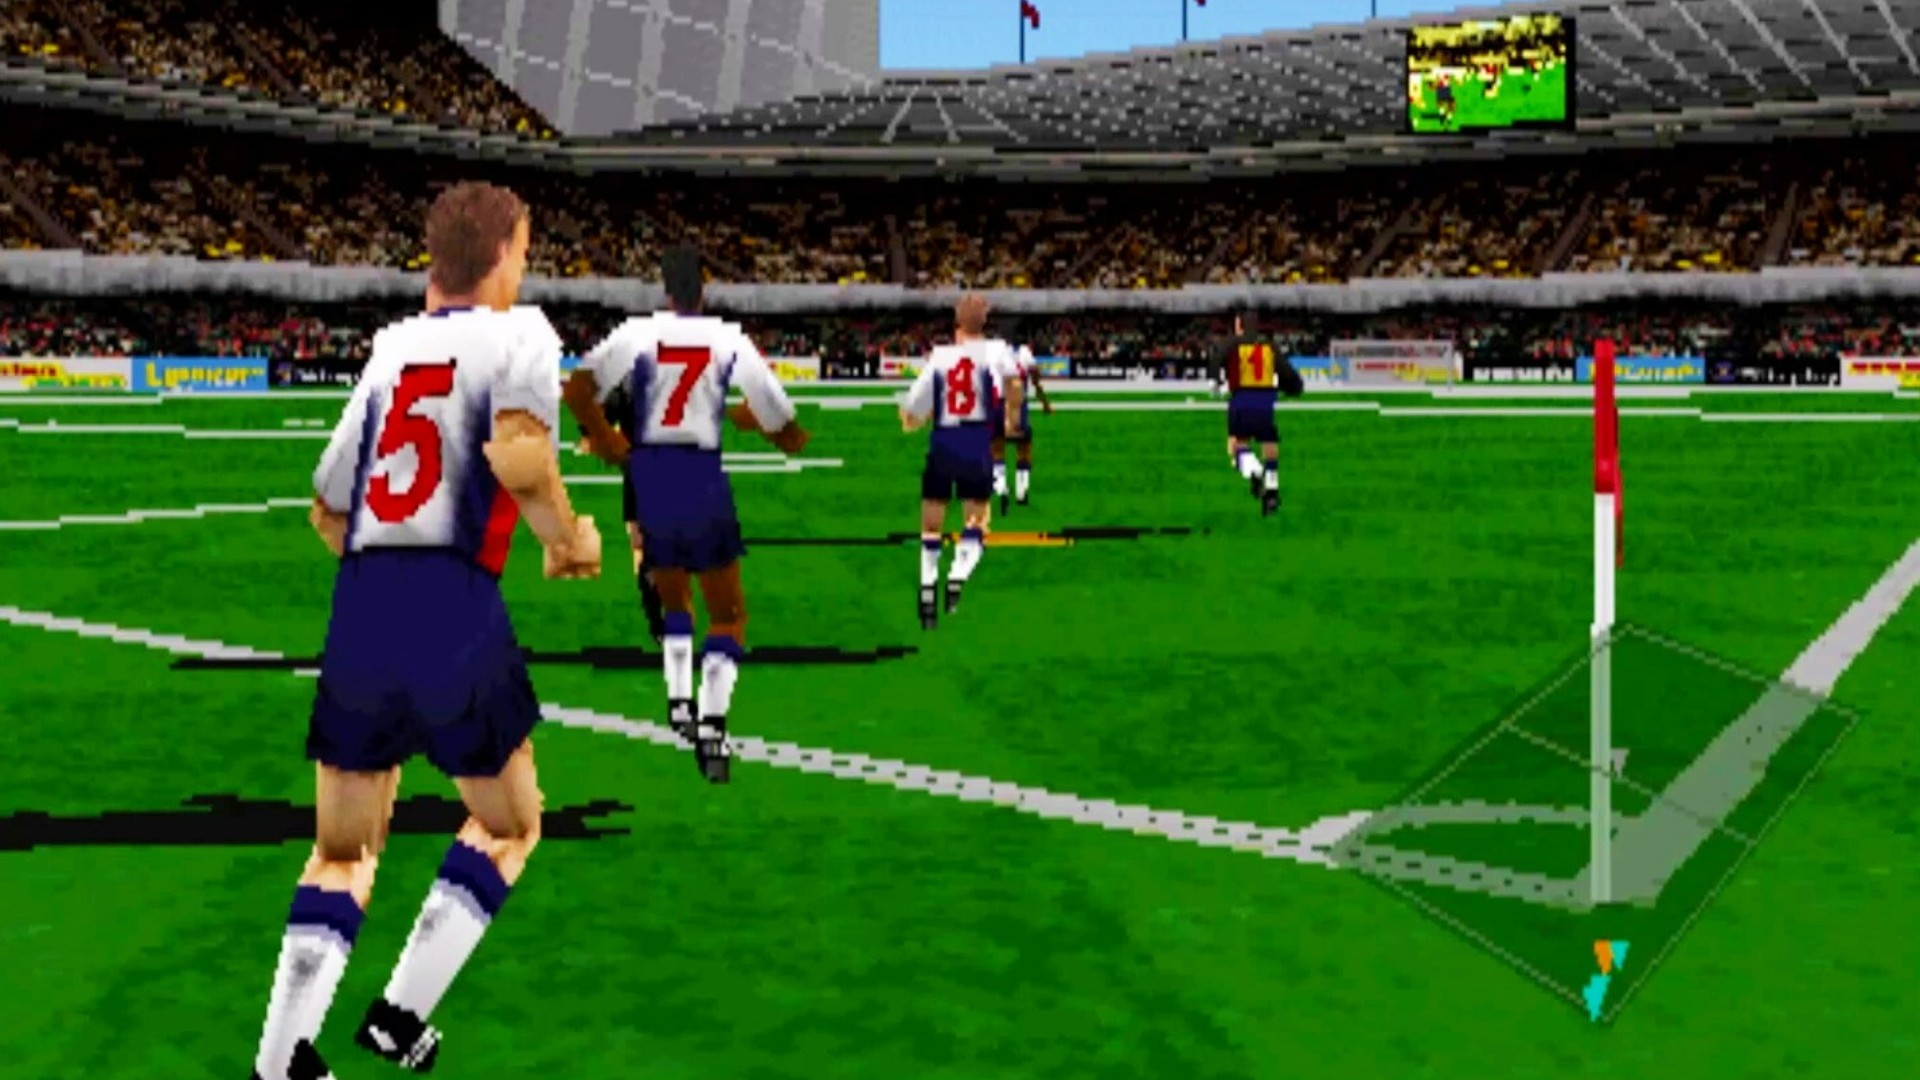 FIFA 23 (Steam), PC